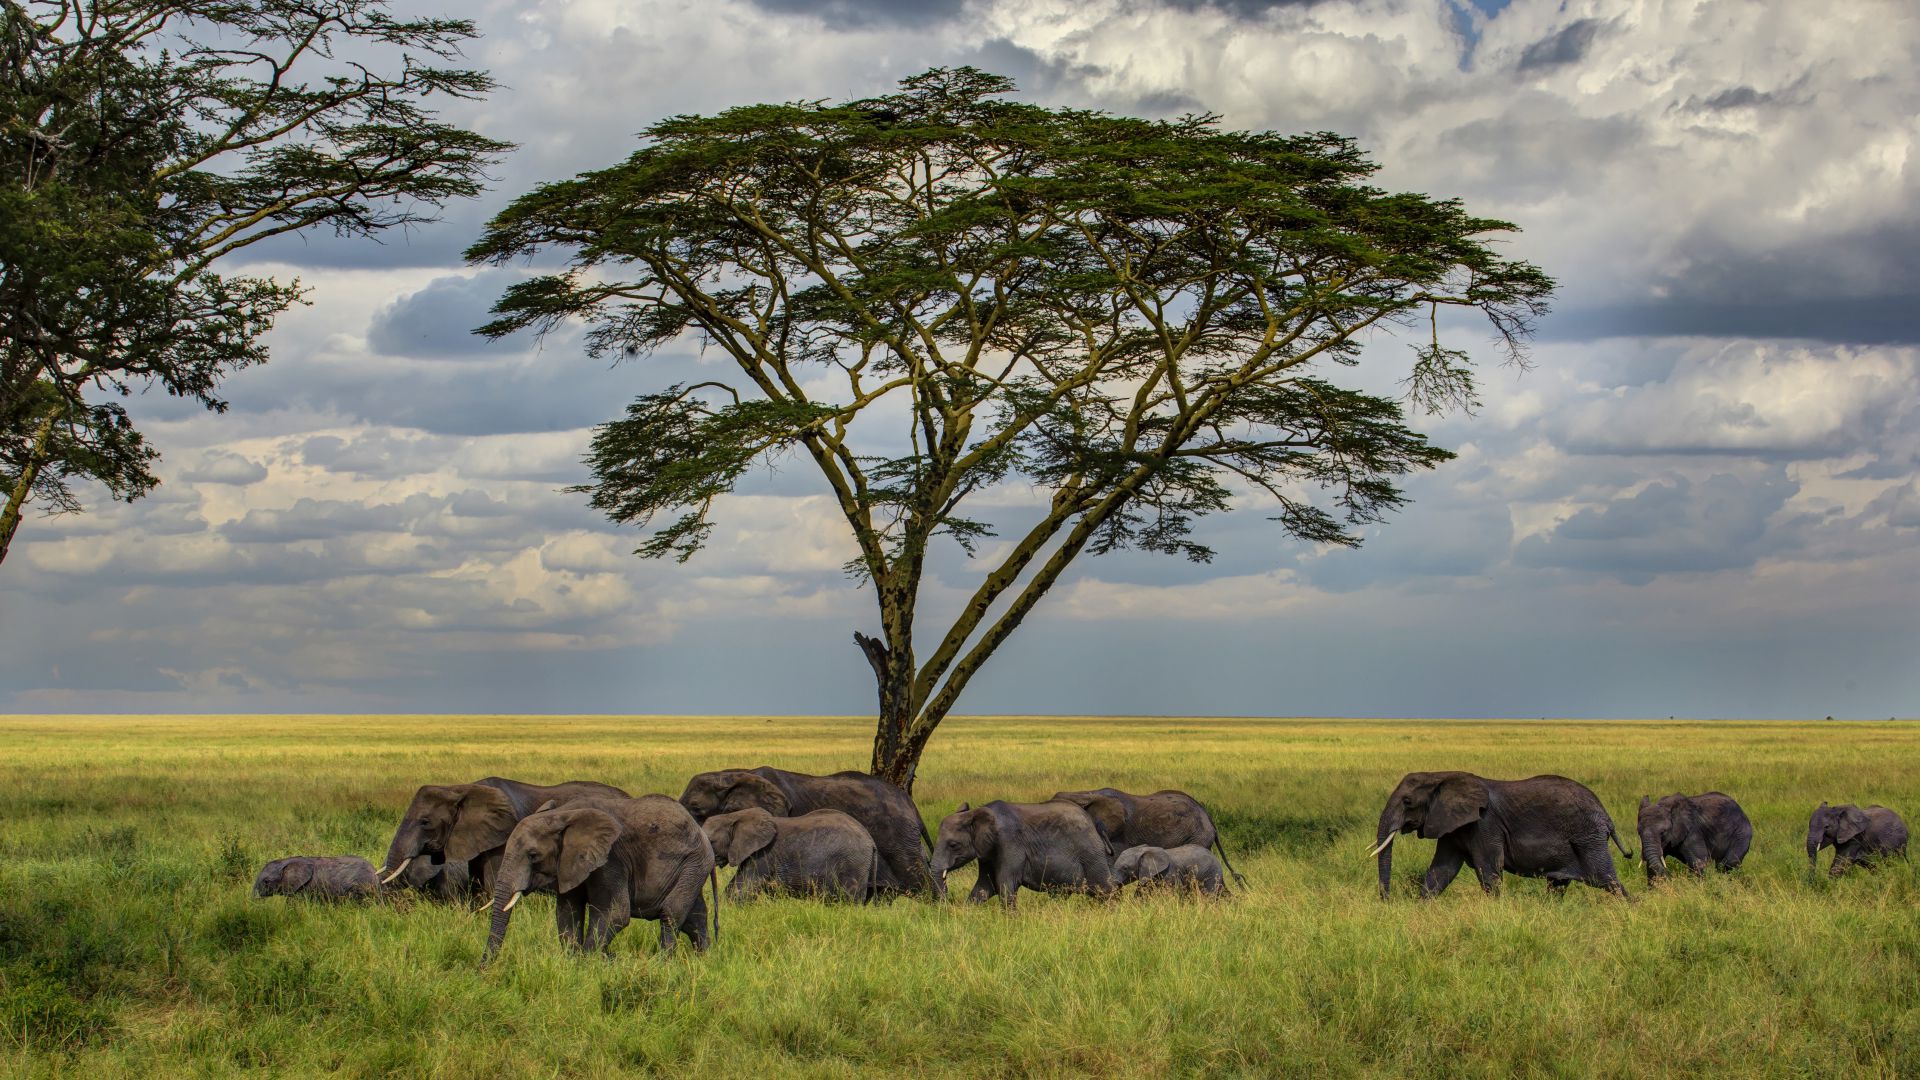 Слон, 5k, 4k, саванны, дерево, облака, Elephant, 5k, 4k wallpaper, savanna, tree, clouds (horizontal)